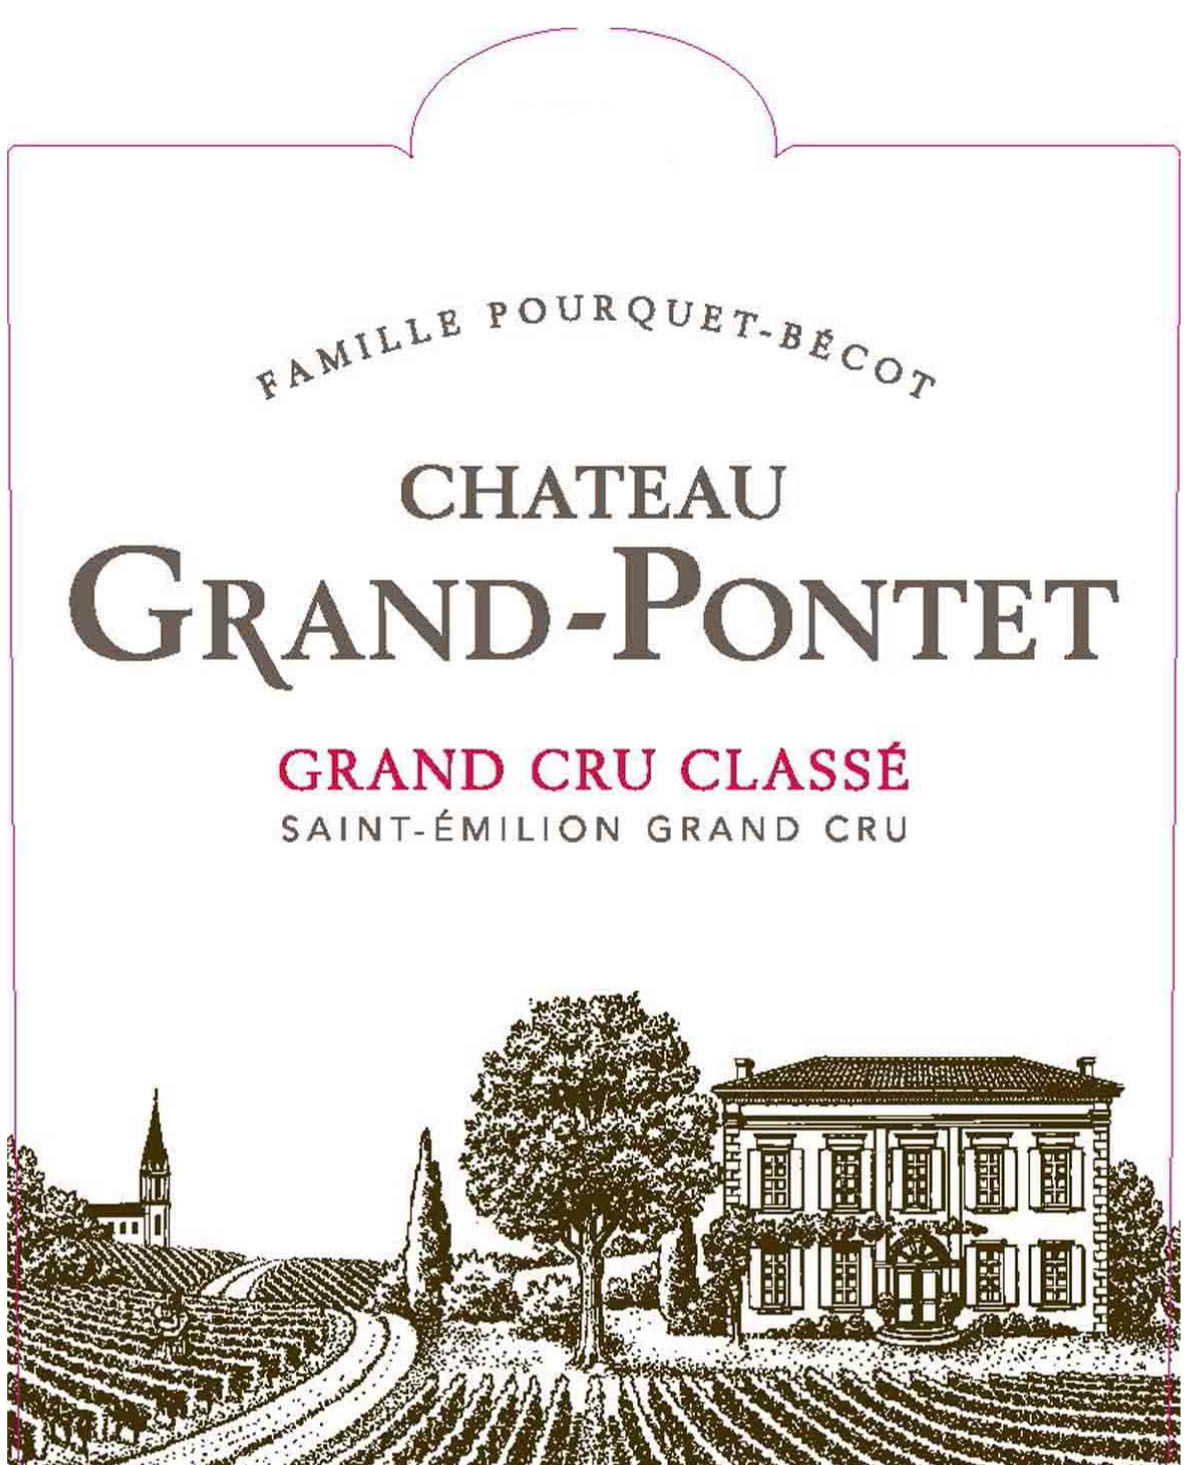 Chateau Grand Pontet label